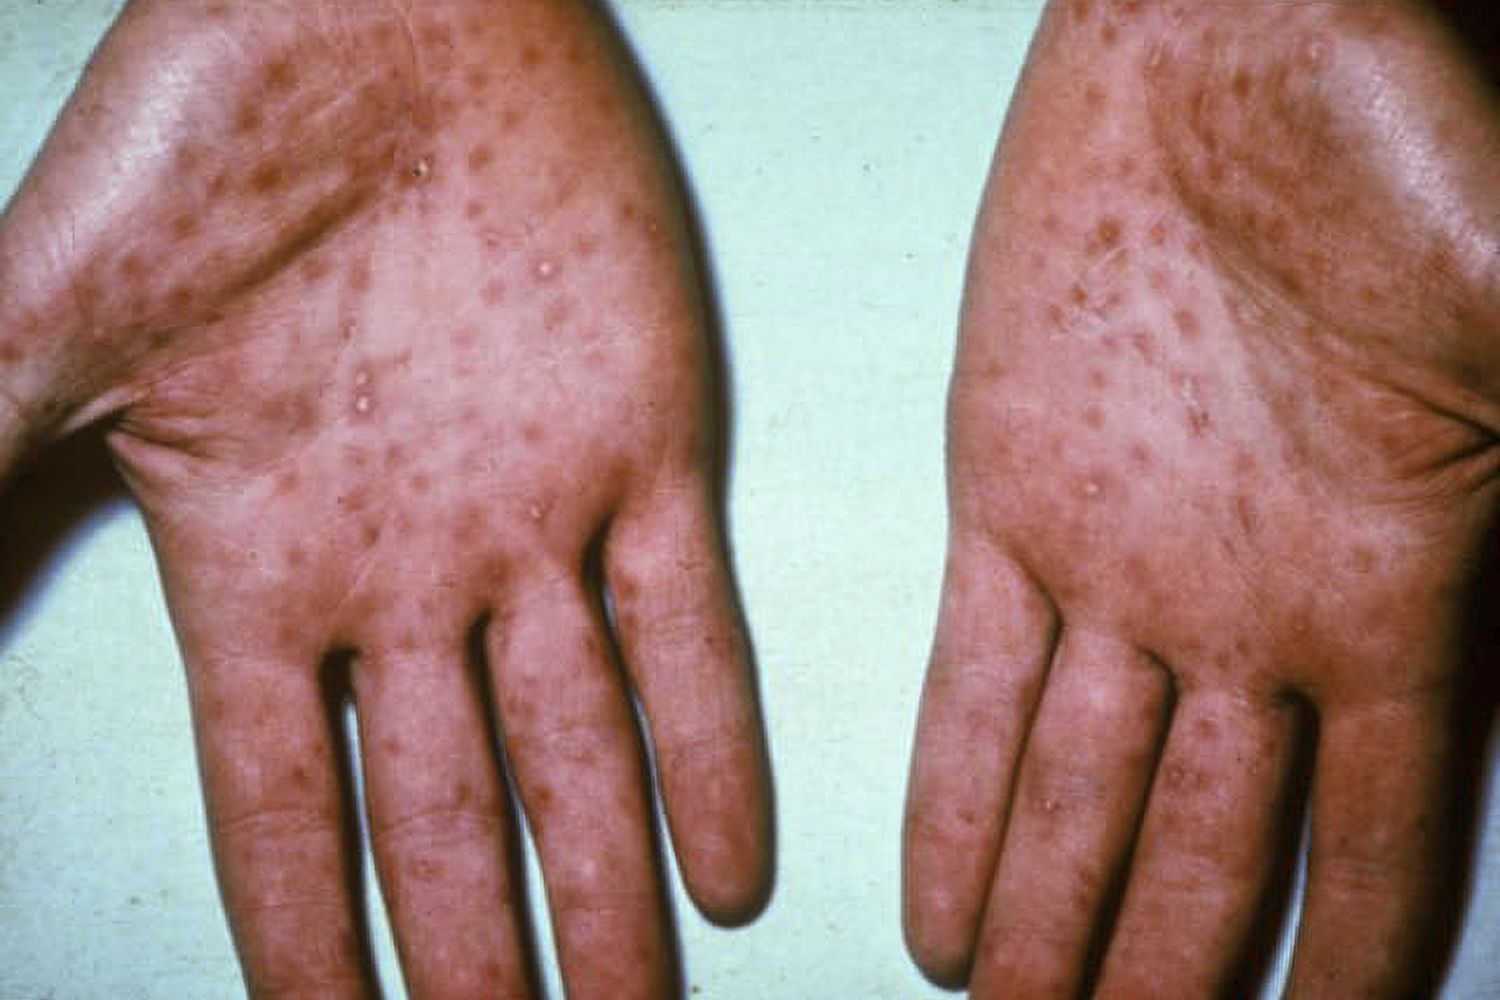 A syphillis rash on hands